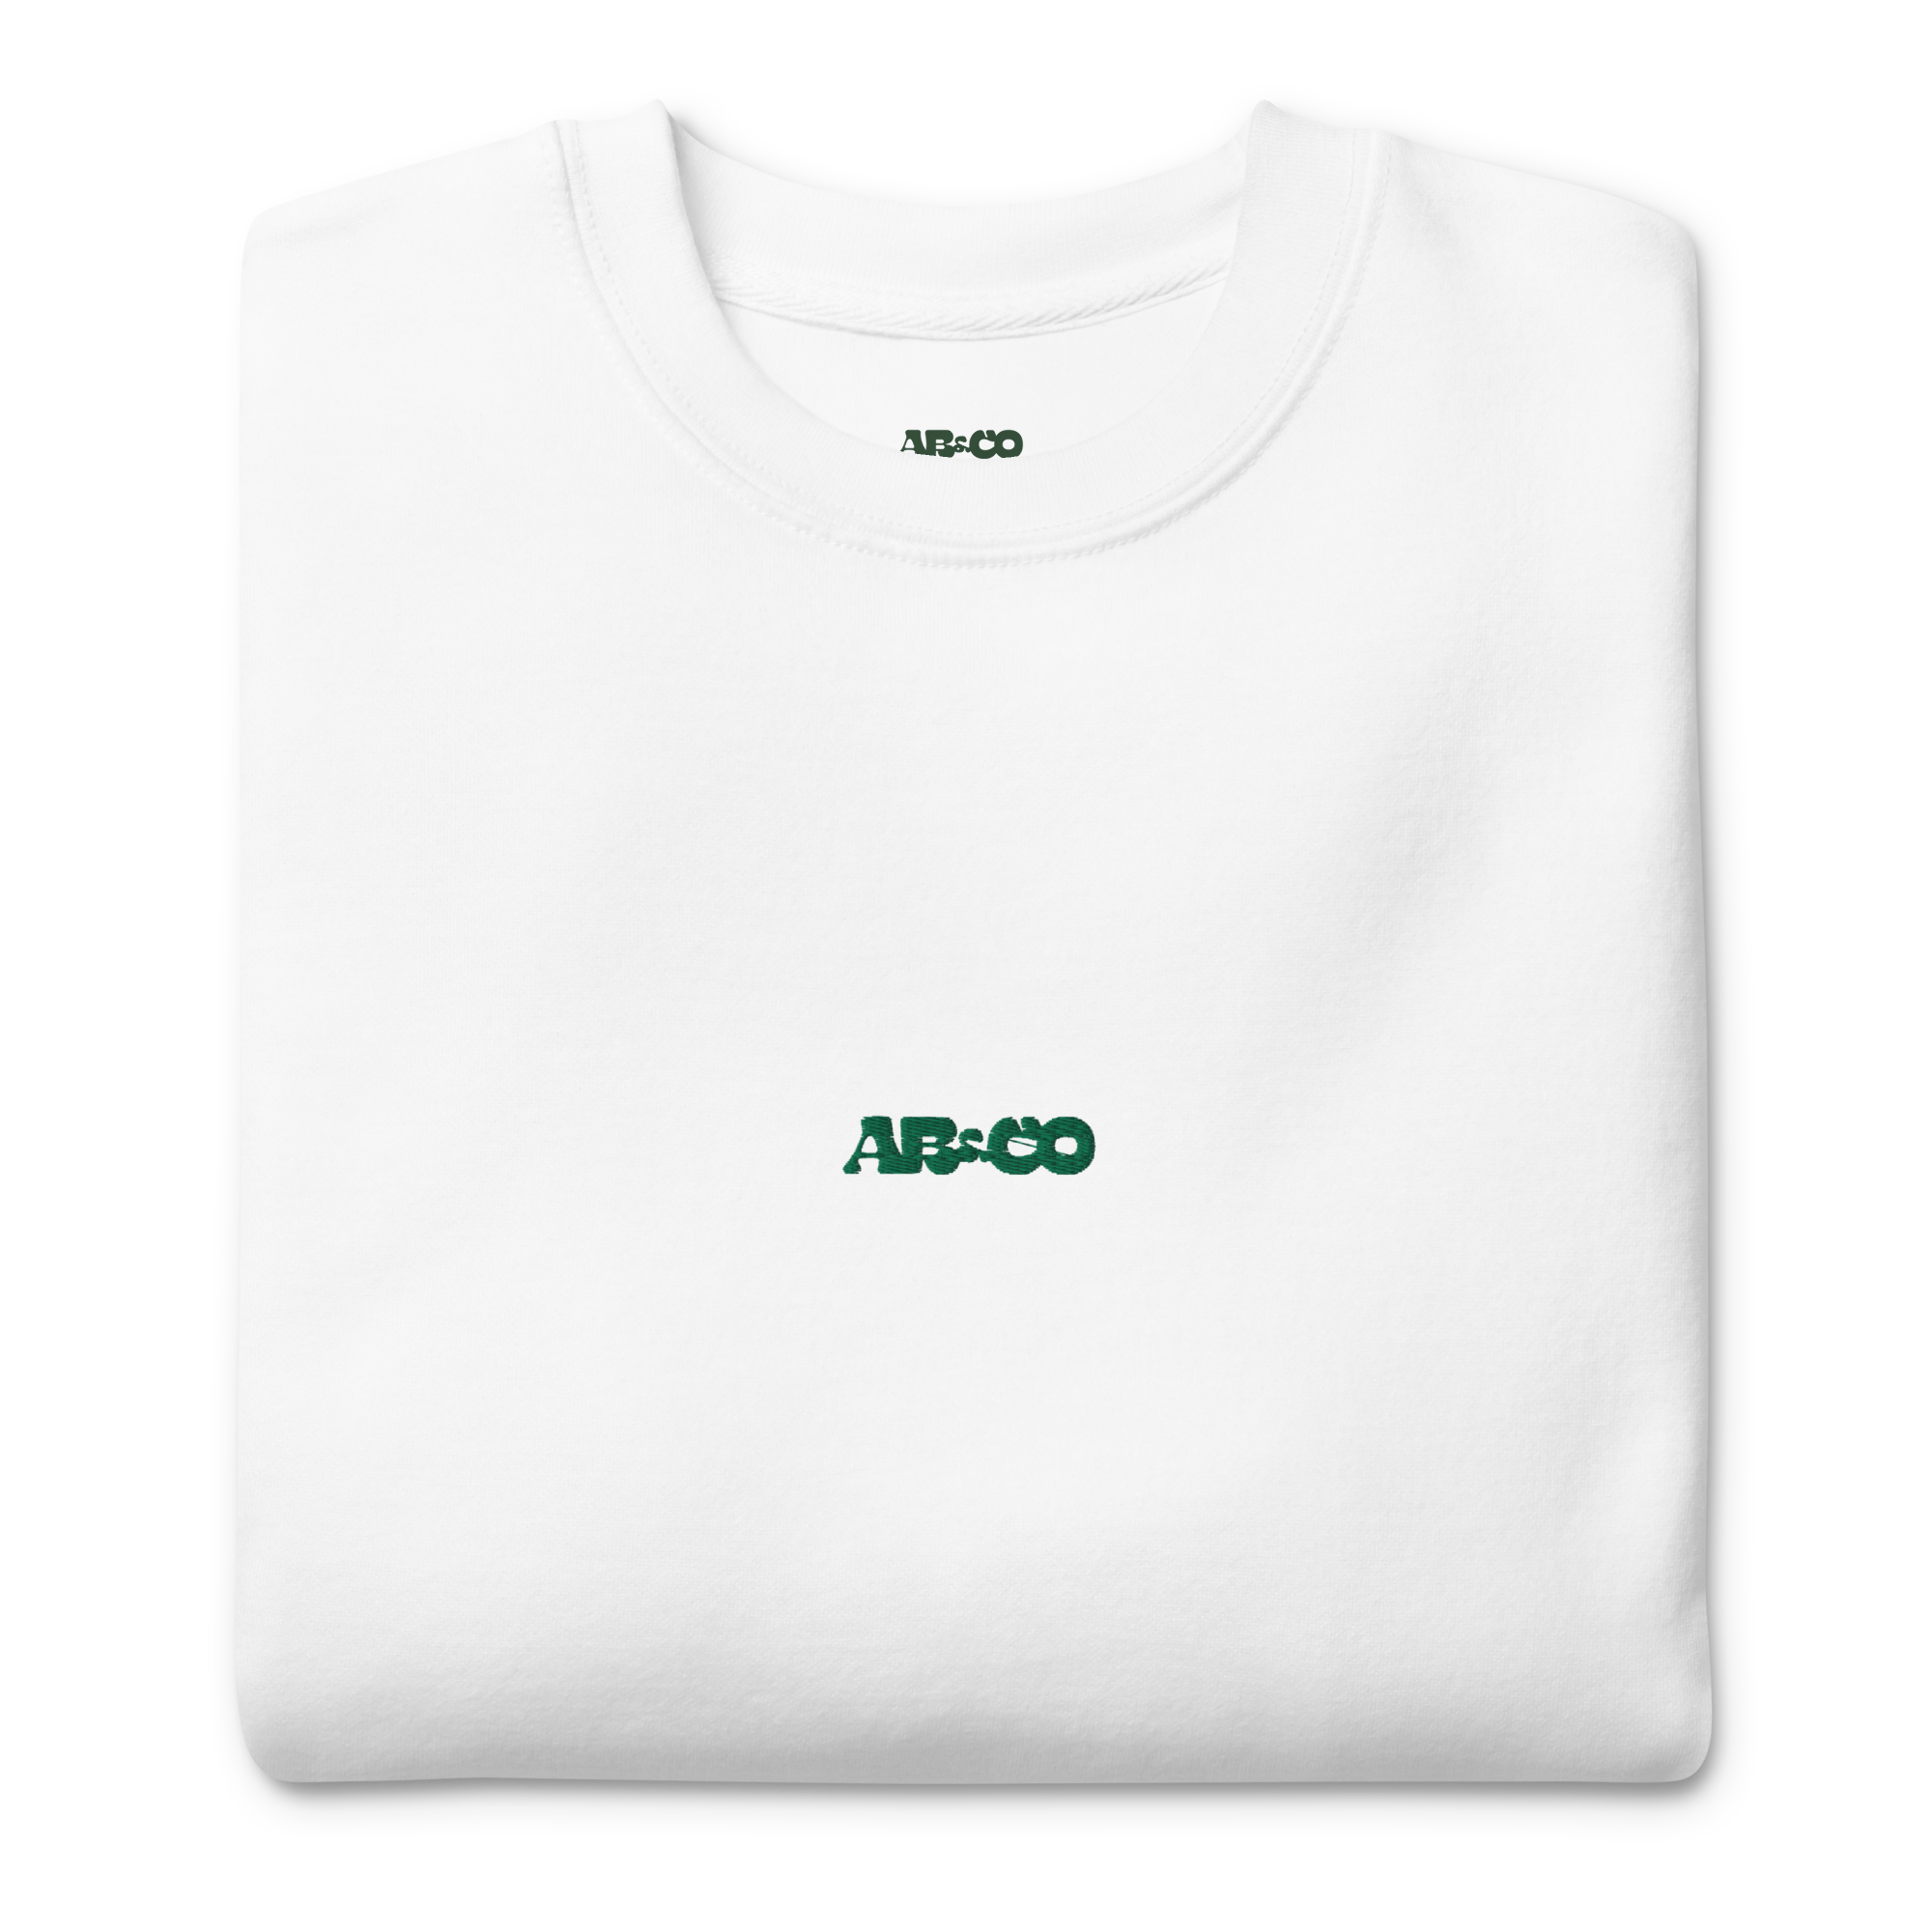 AB&CO Embroidered Premium Sweatshirt